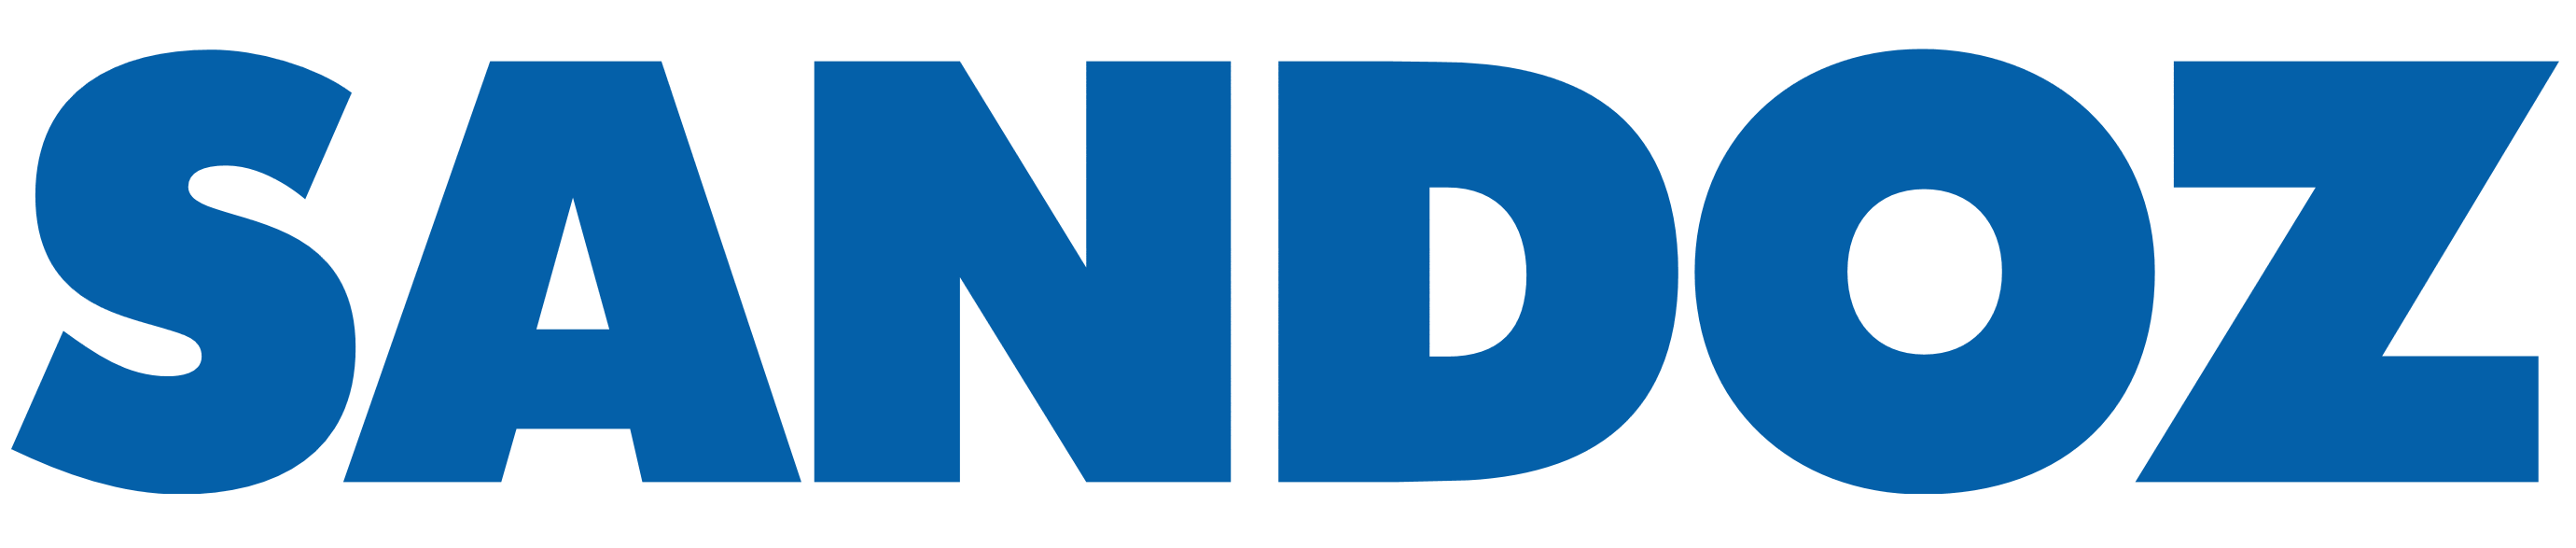 Sandoz Logo - Sandoz – Logos, brands and logotypes